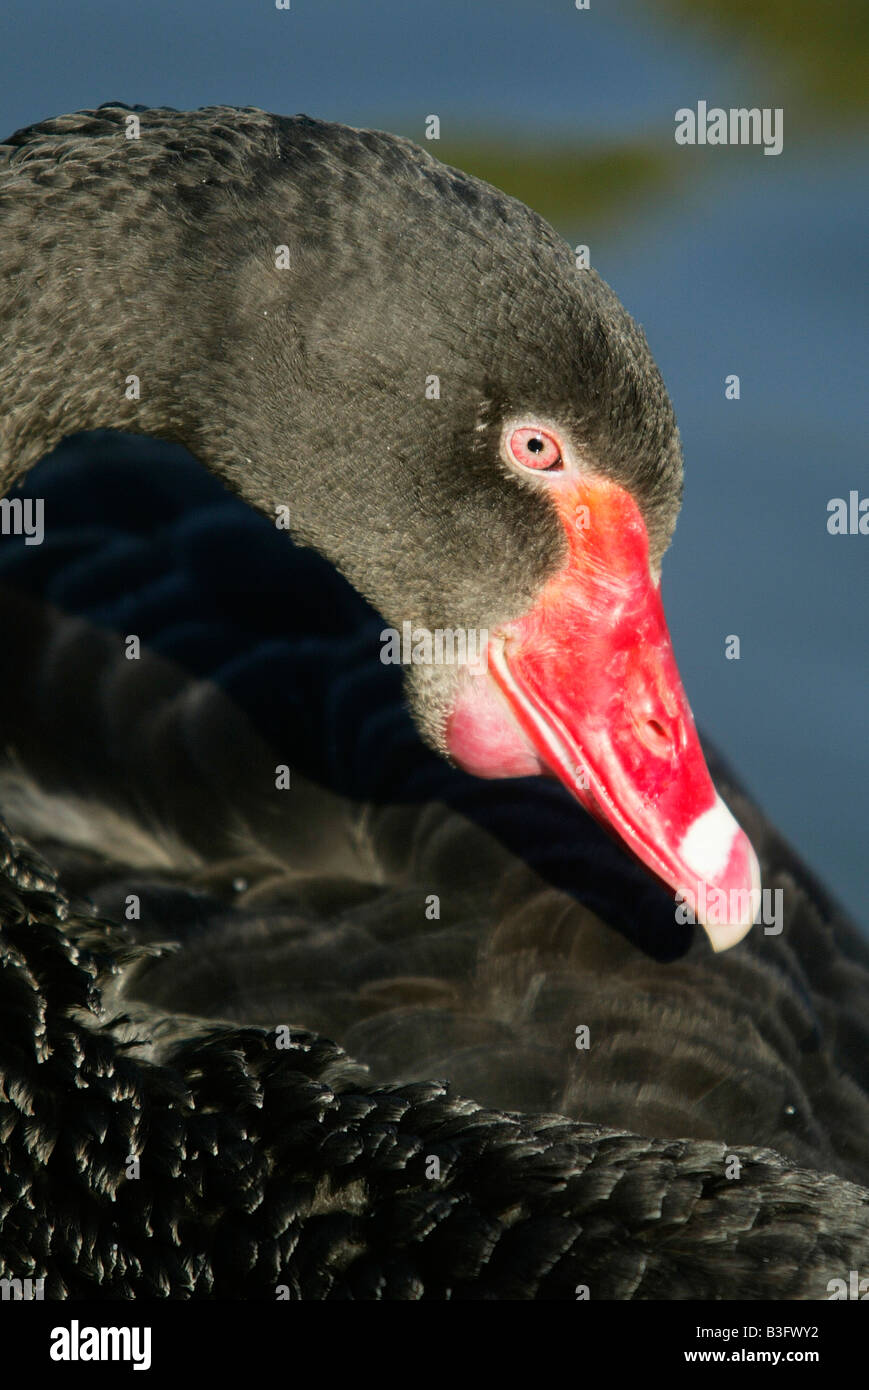 Black Swan Stock Photo